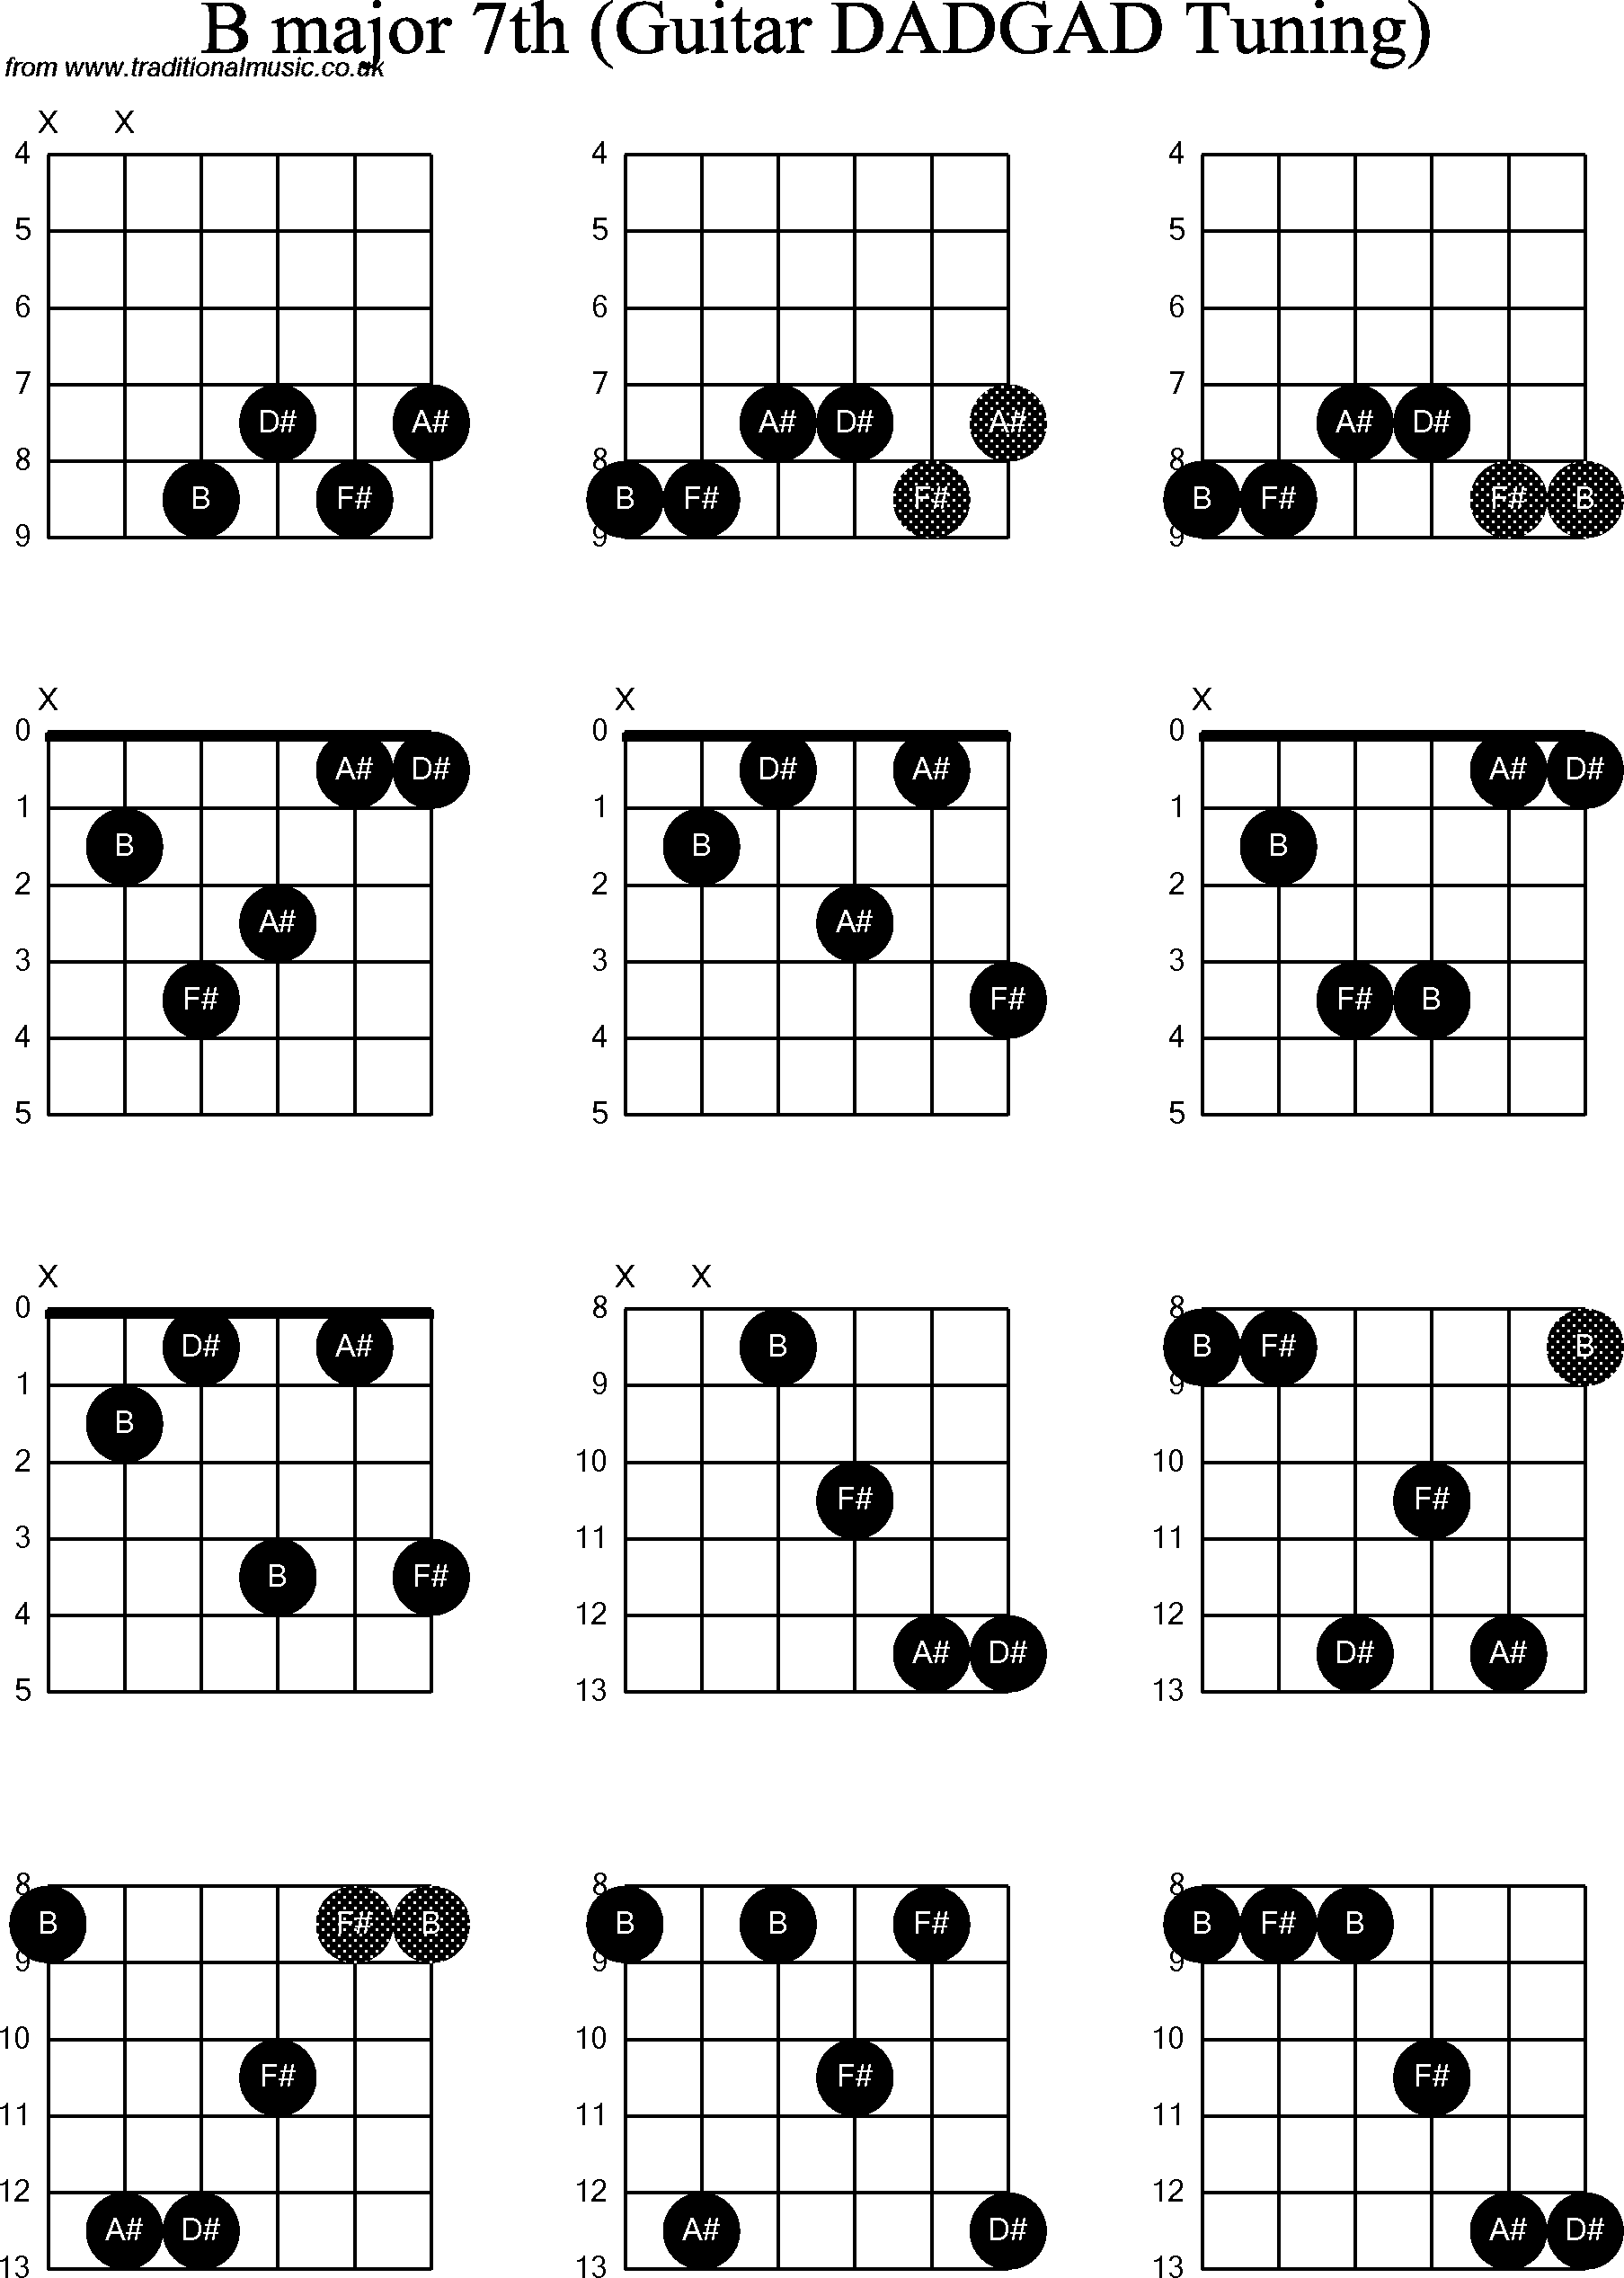 Chord Diagrams for D Modal Guitar(DADGAD), B Major7th